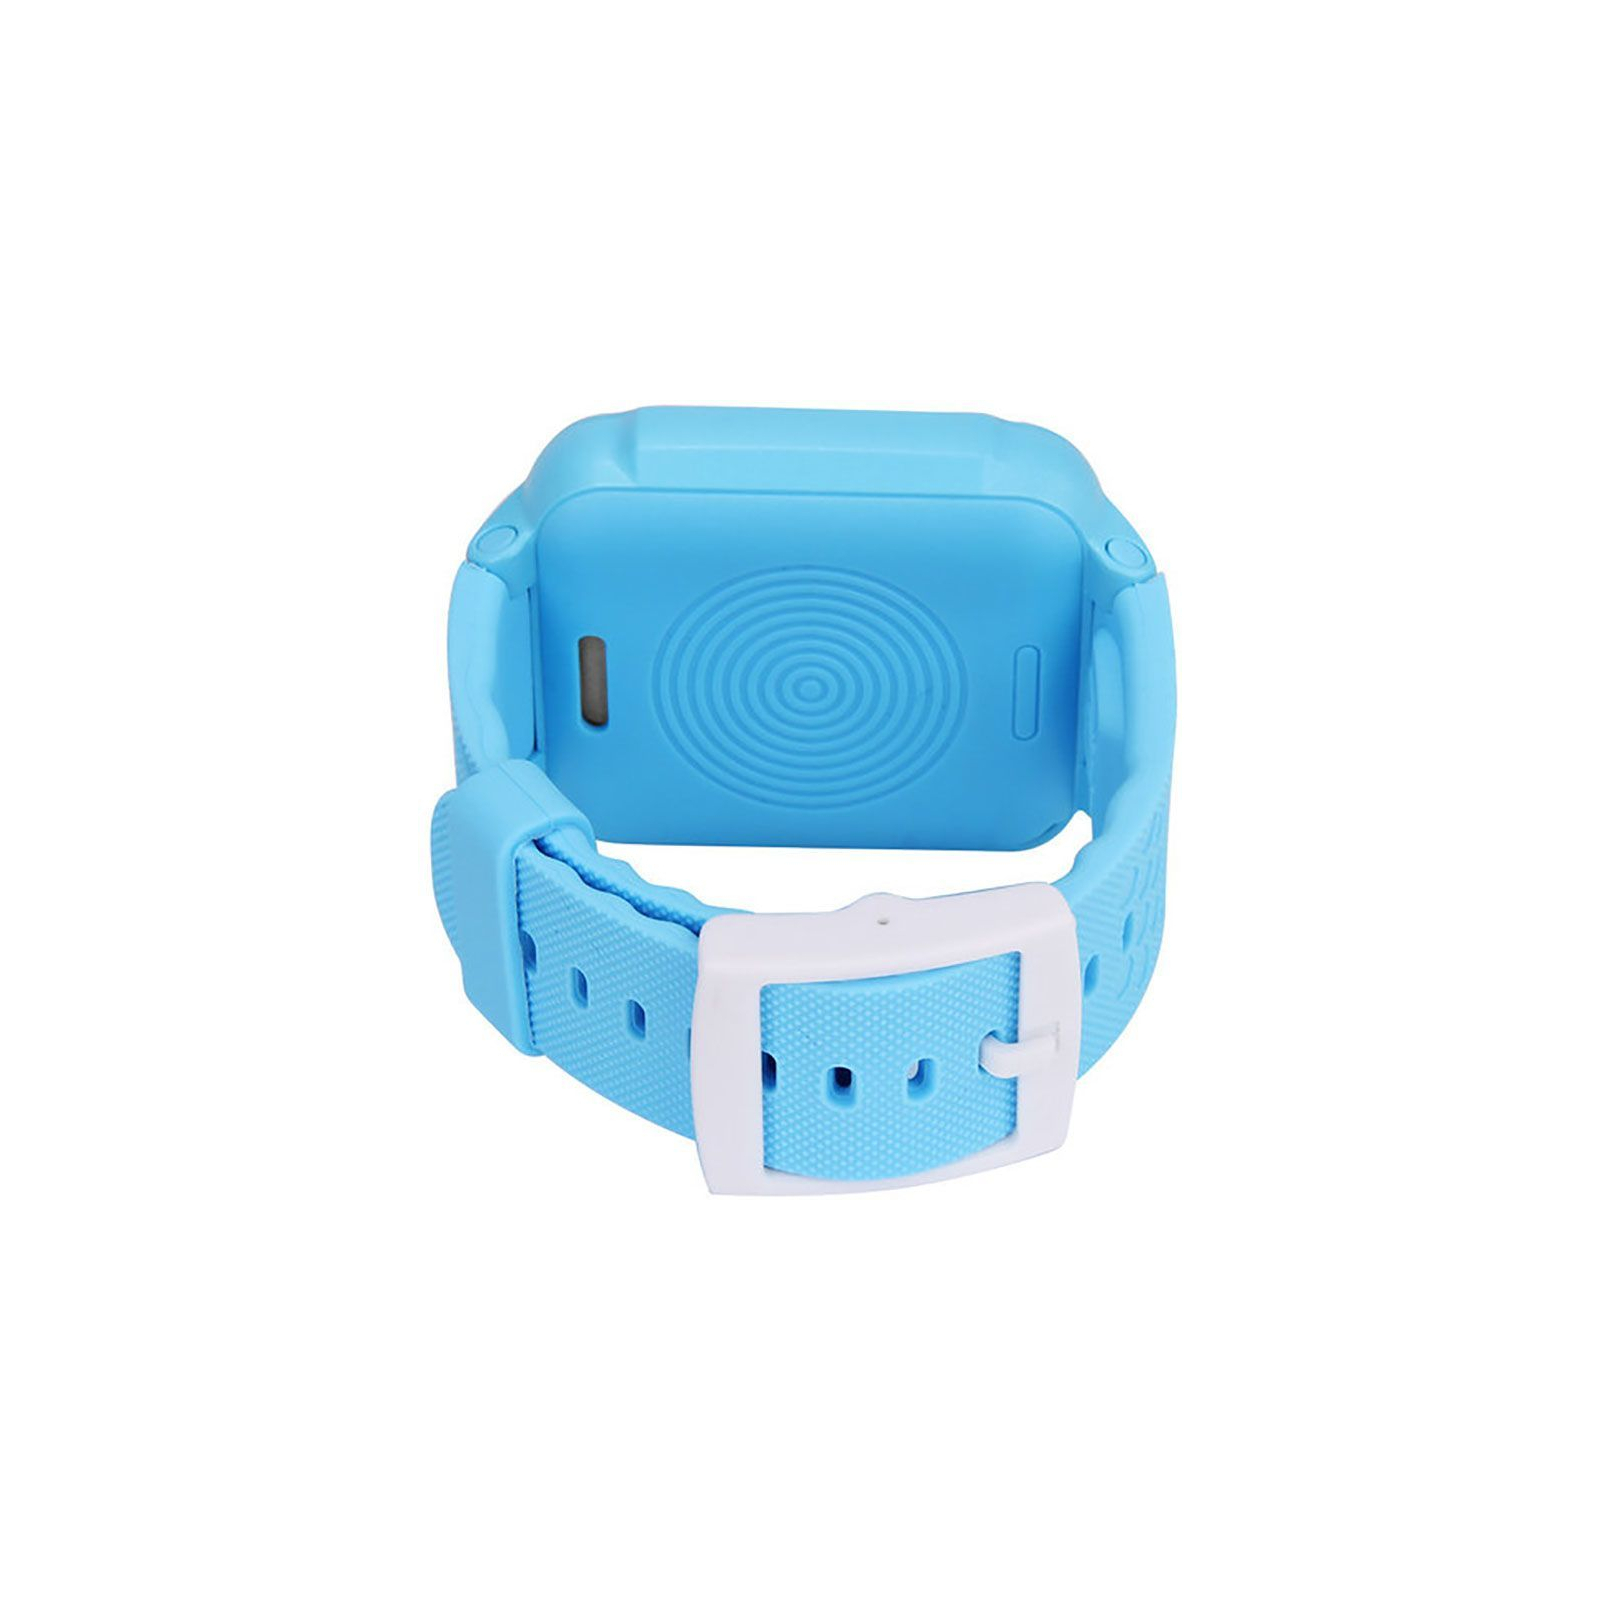 Смарт-часы UWatch K3 Kids waterproof smart watch Blue (F_51807) изображение 4